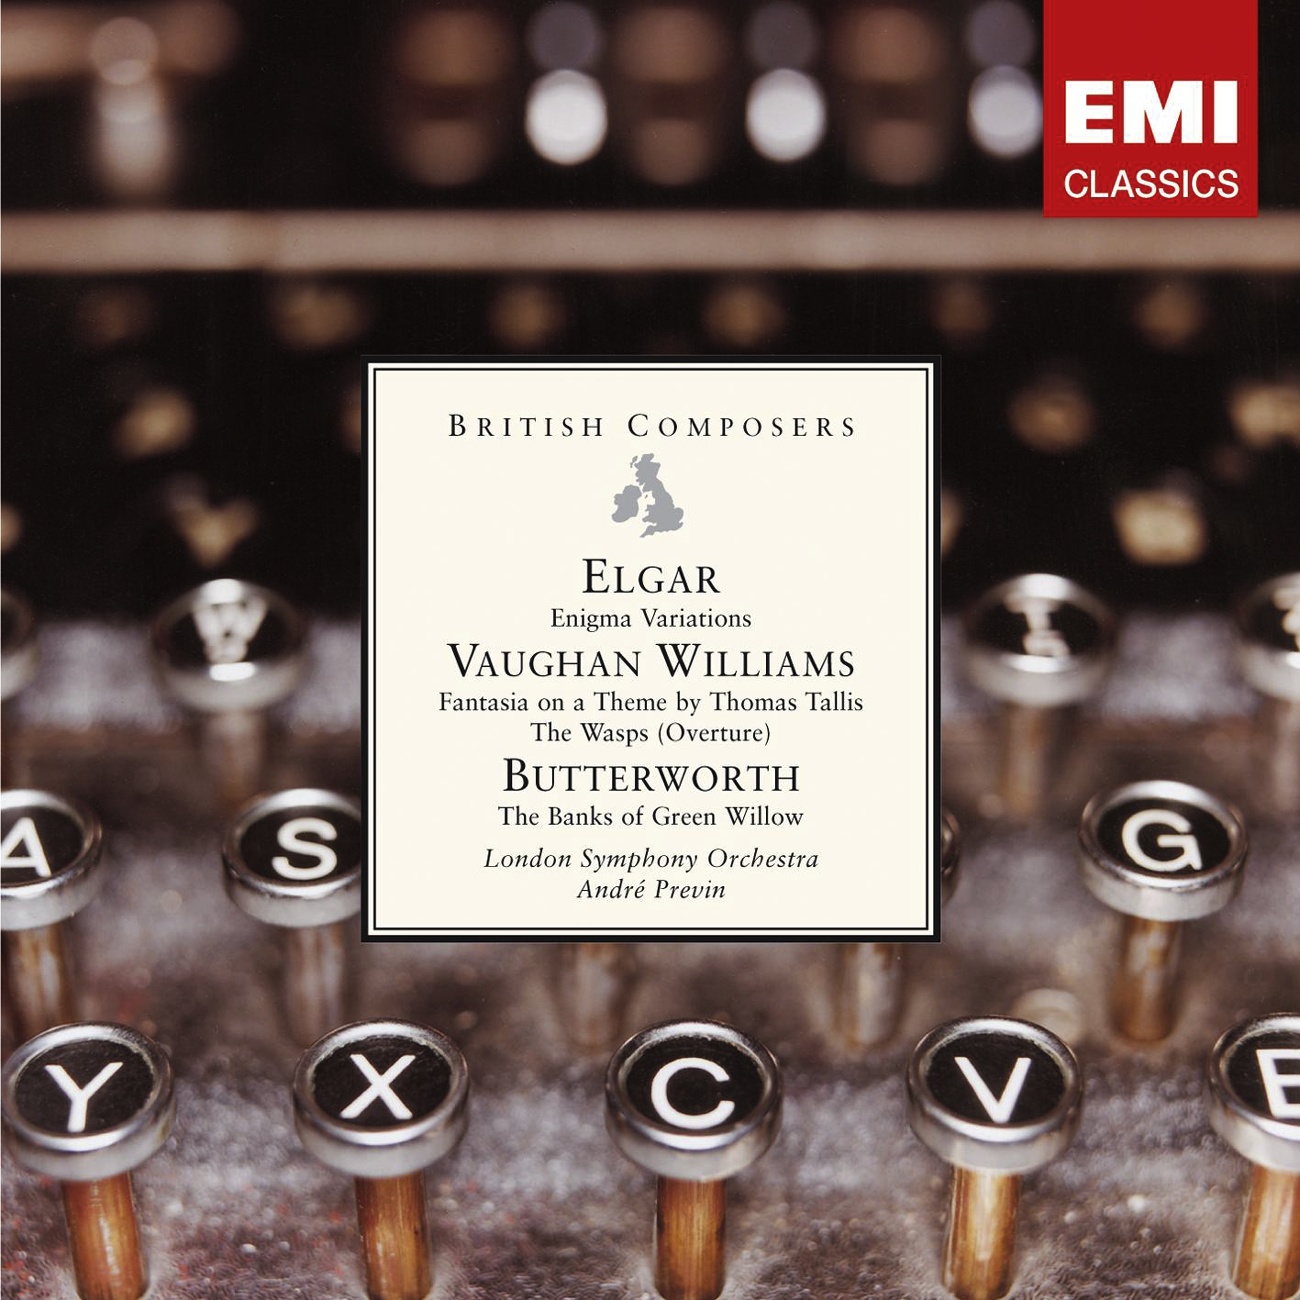 Variations on an Original Theme 'Enigma' Op. 36 (2007 Digital Remaster): VIII.   W.N. (Winifred Norbury) (Allegretto)